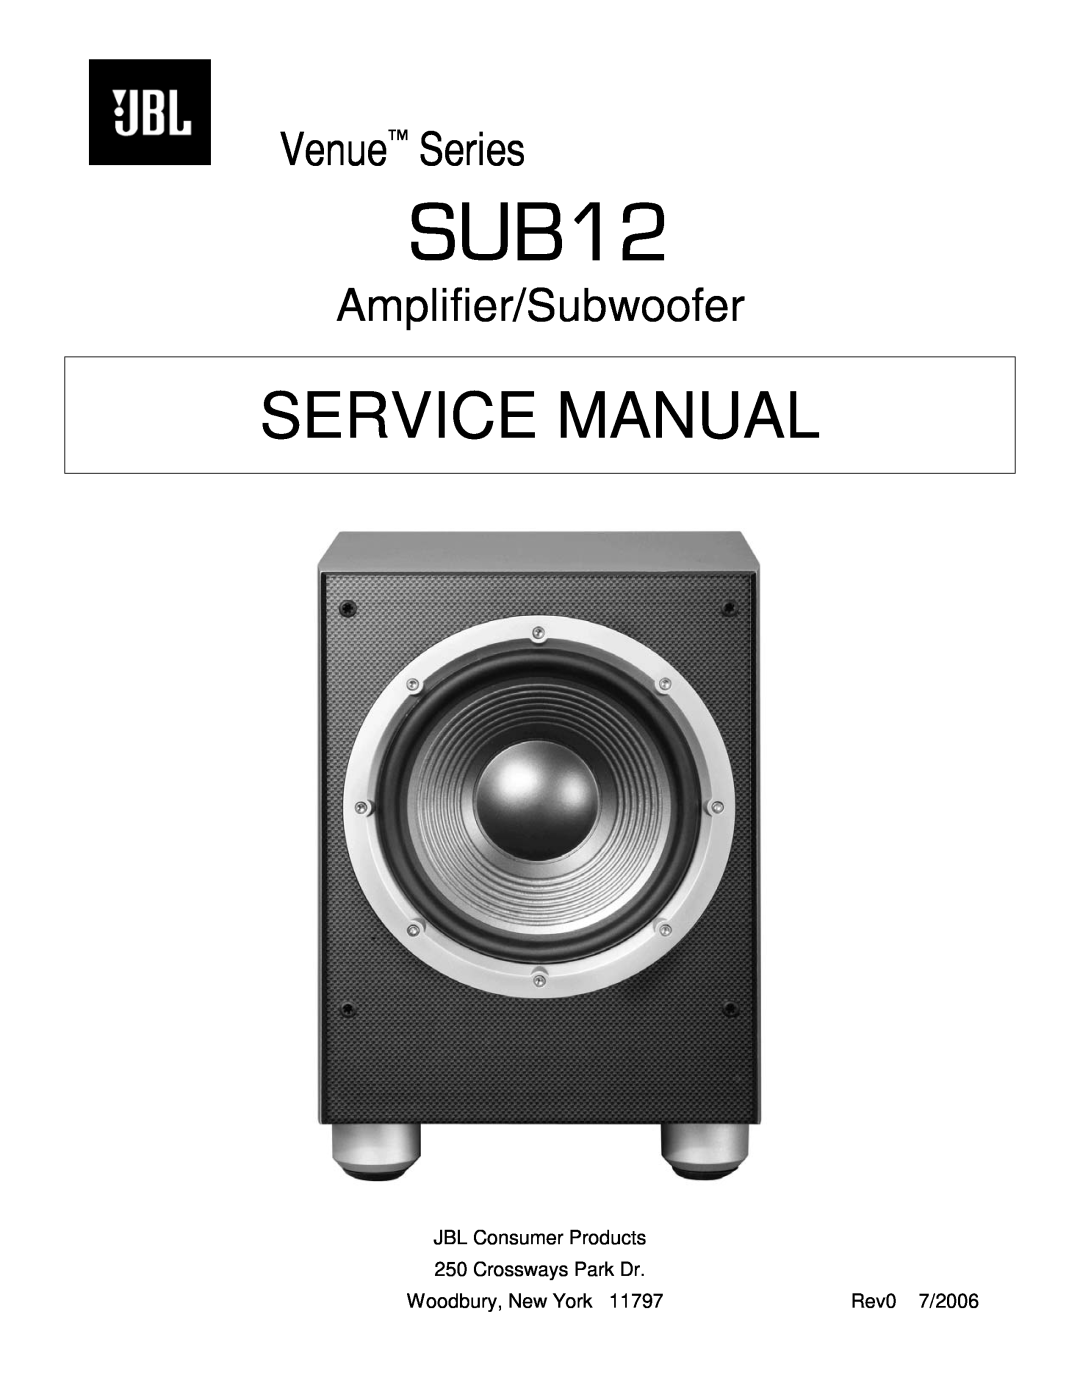 JBL SUB12 service manual Venue Series, Amplifier/Subwoofer 